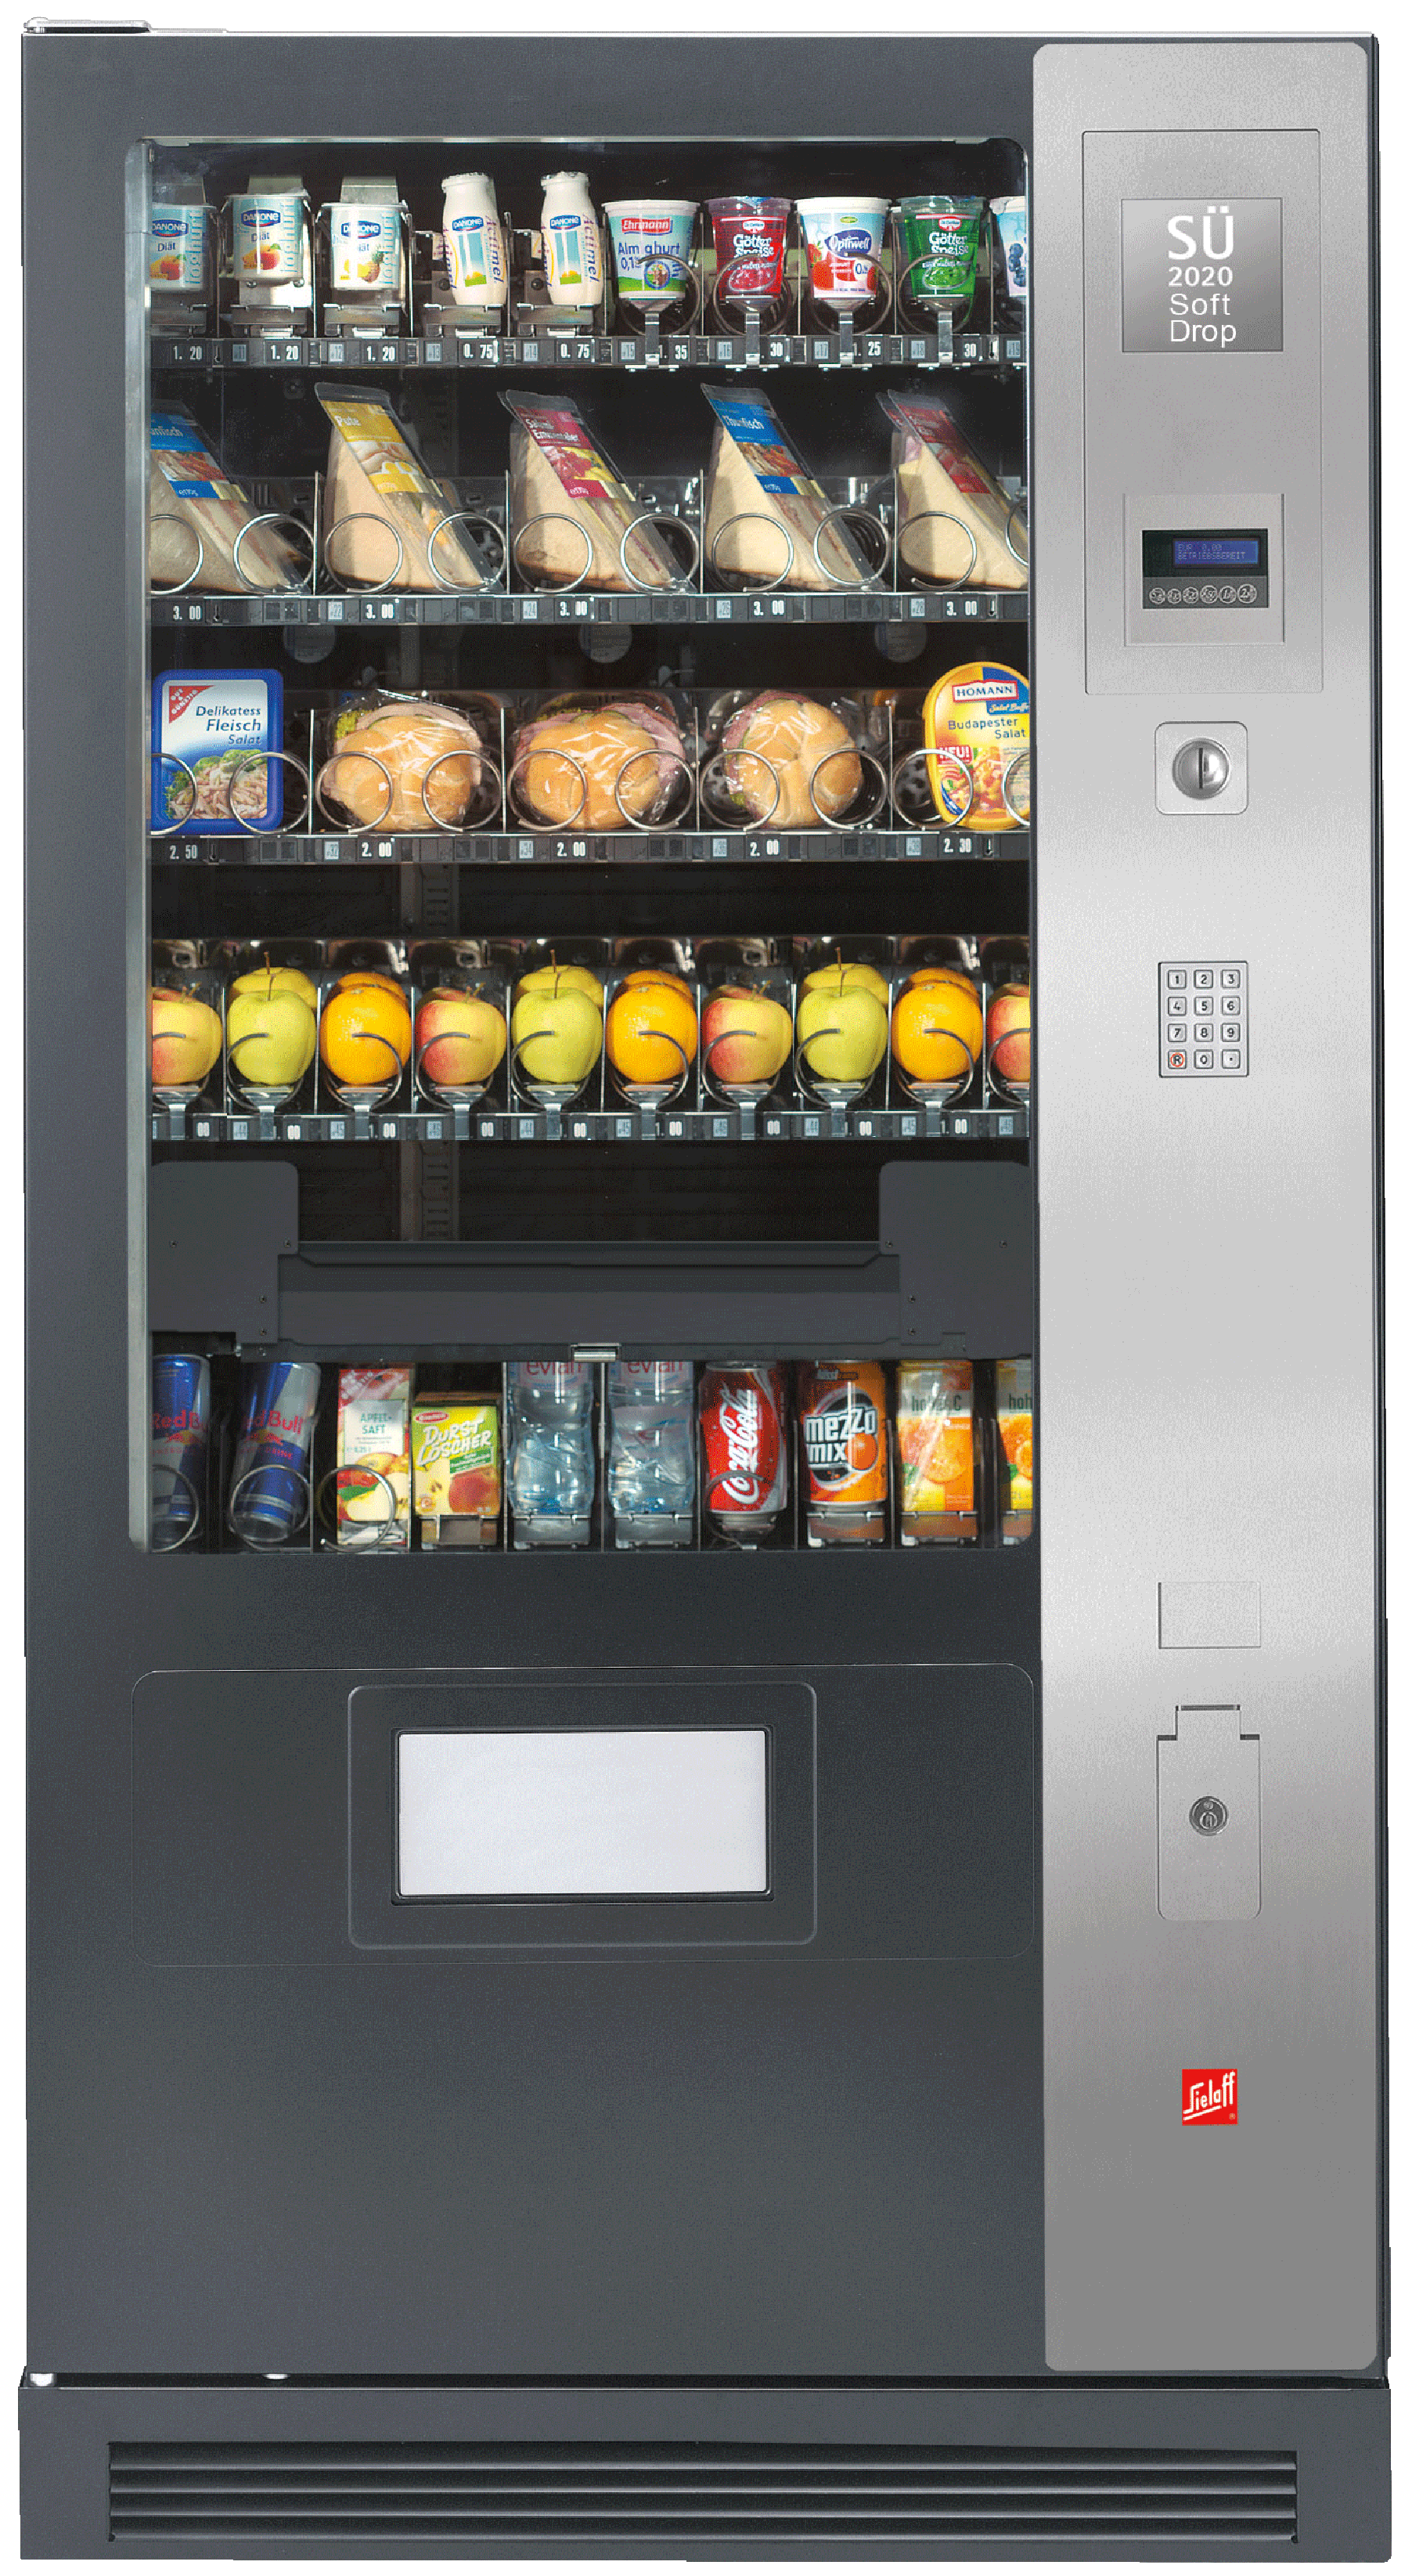 https://www.flavura.de/shop/media/image/08/c0/4a/sielaff-s-2020-softdrop-by-flavura-verkaufsautomat-warenautomat-snackautomat-foodautomat.png